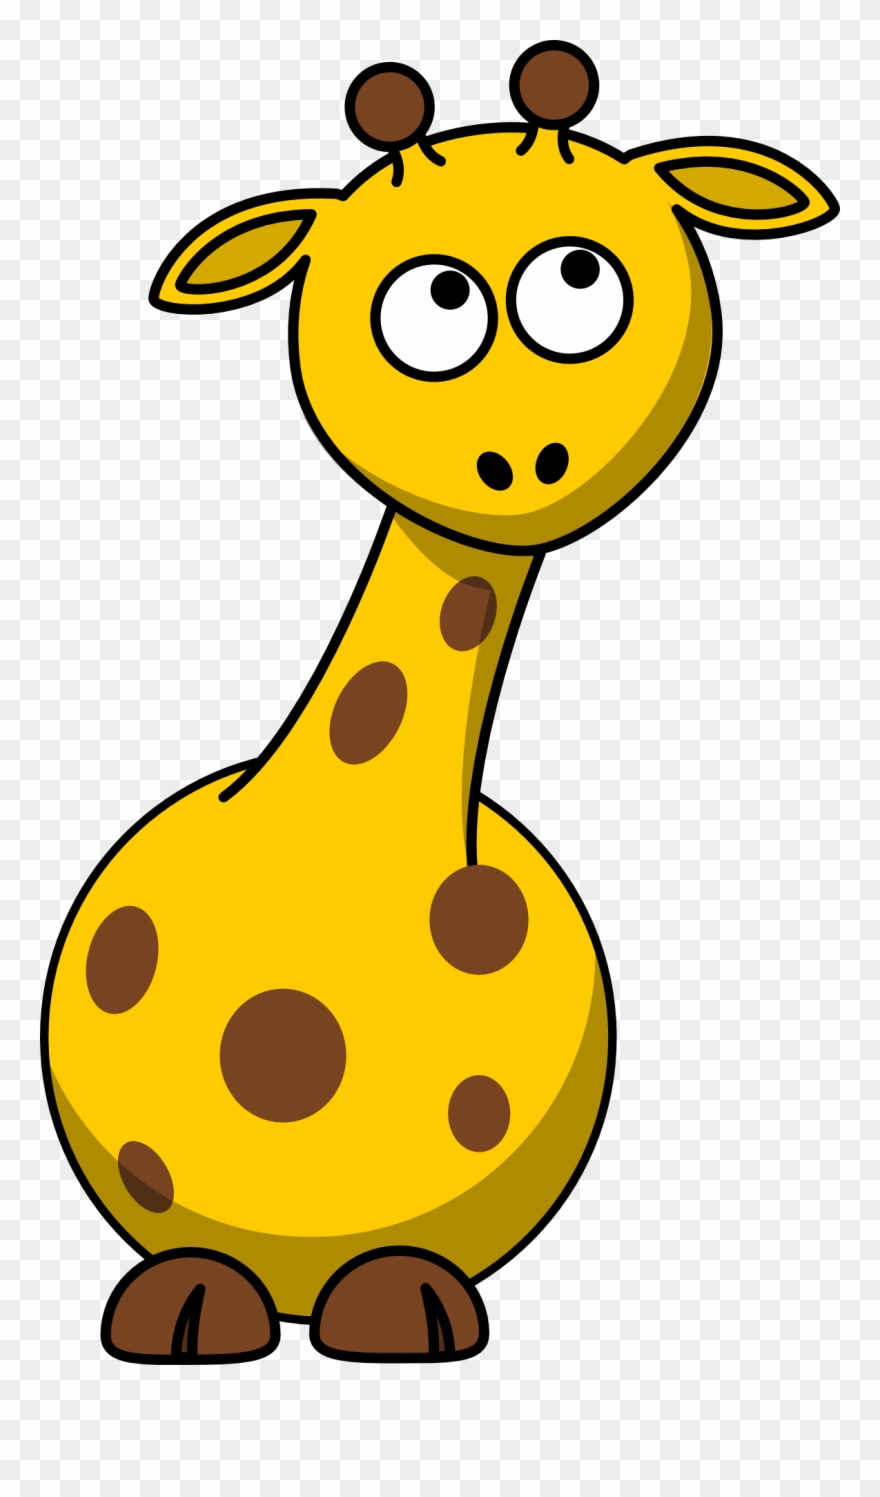 Cartoon giraffe free.